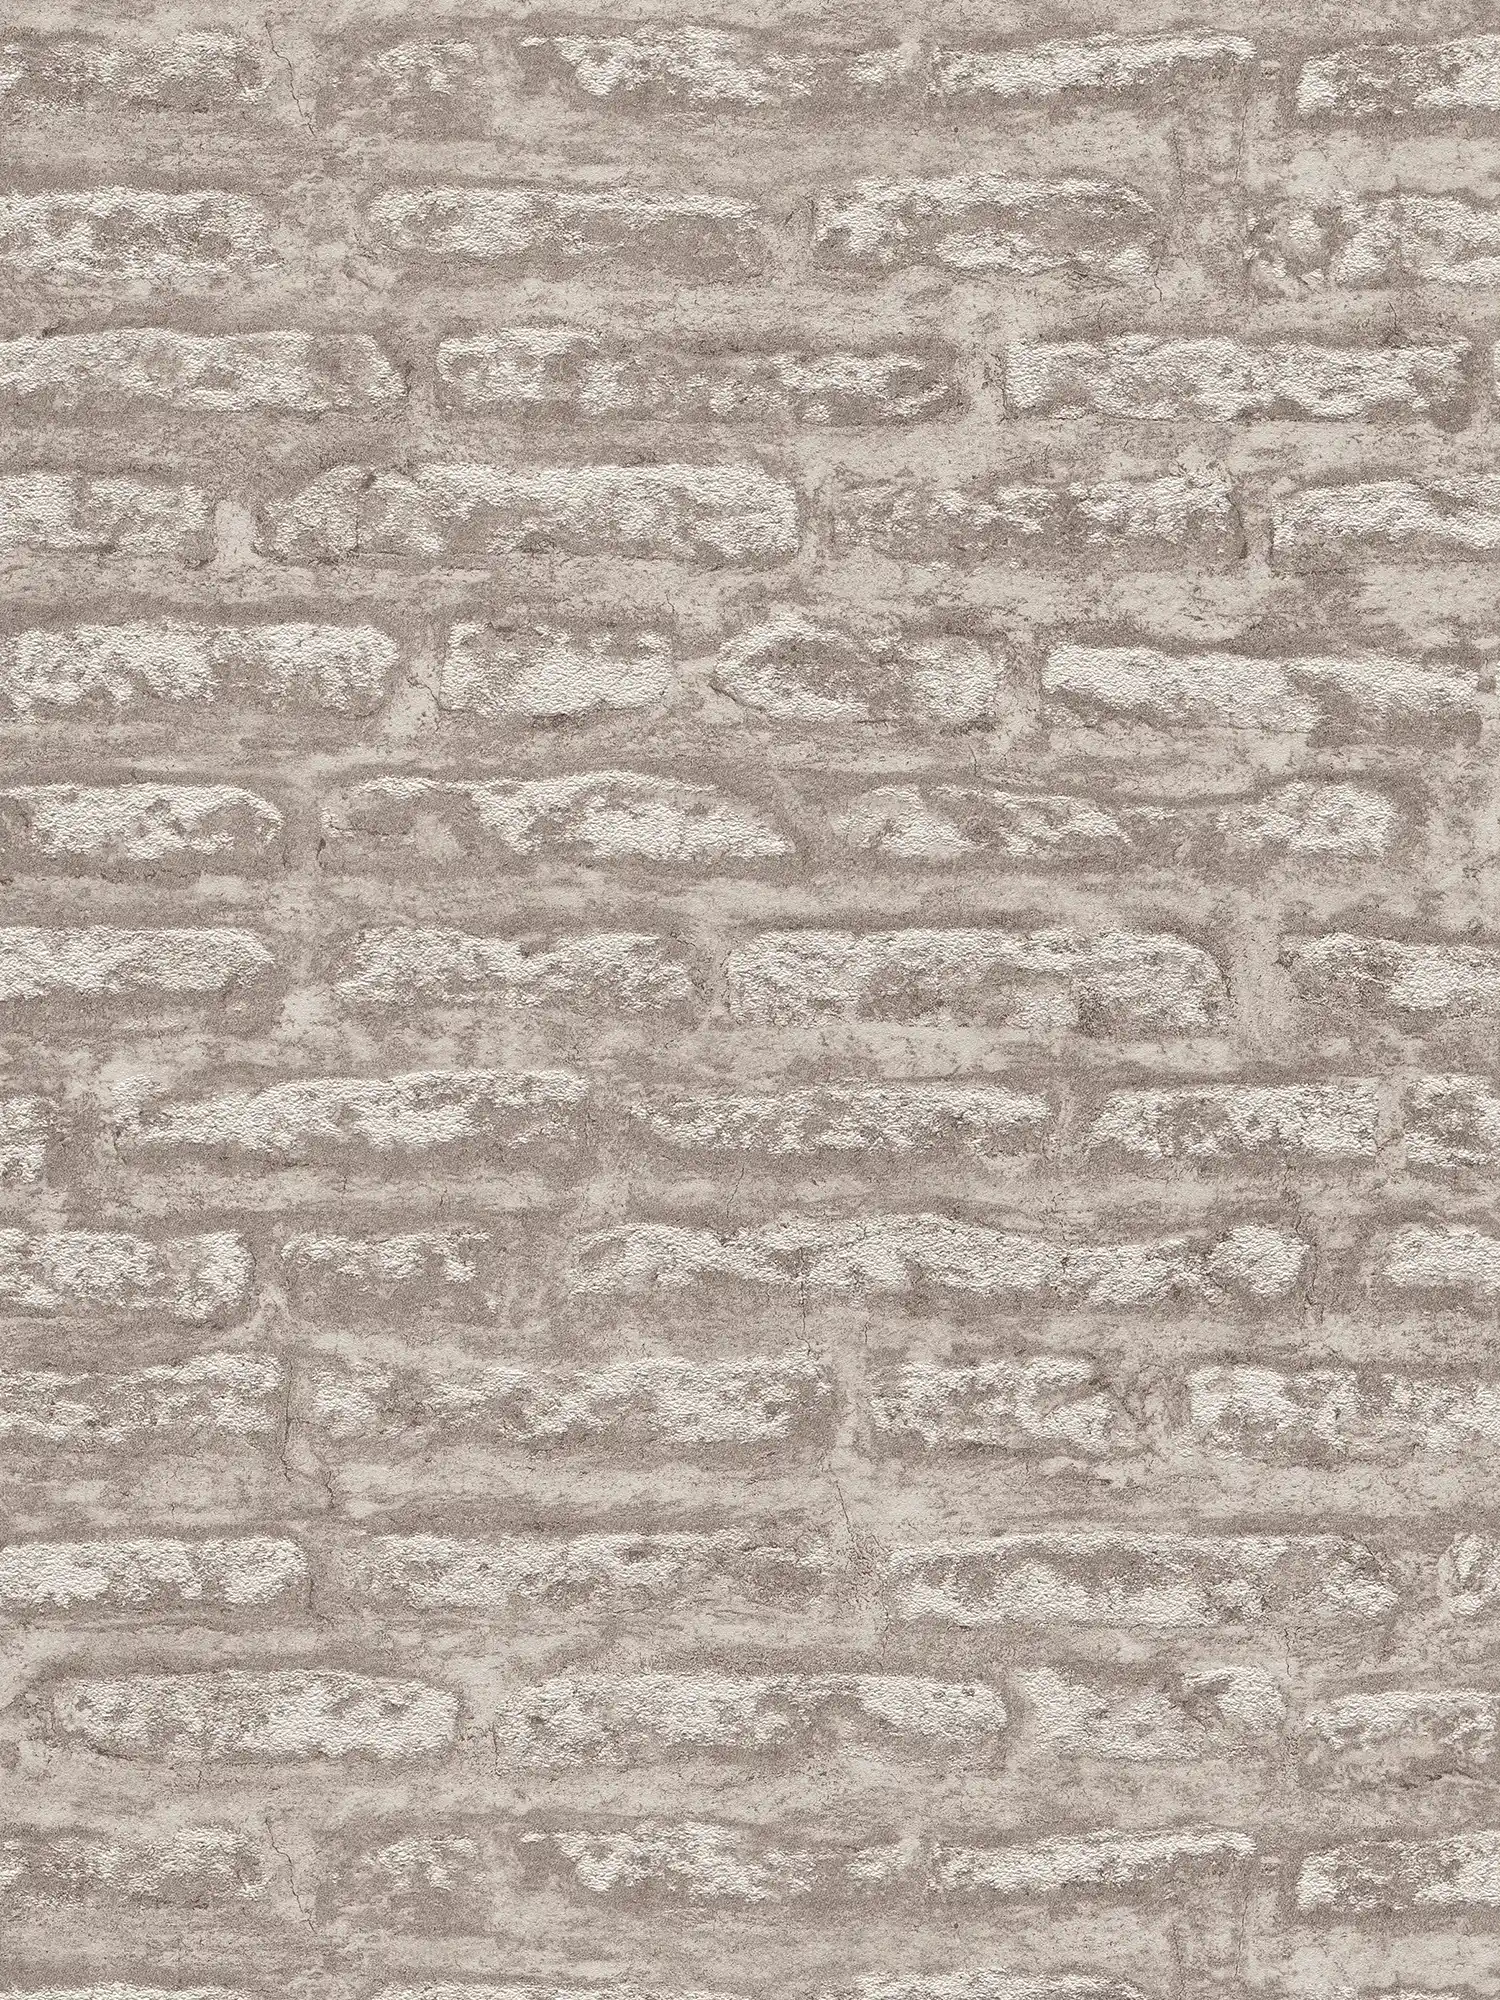 Patterned wallpaper in matt plaster look - grey, brown, white
